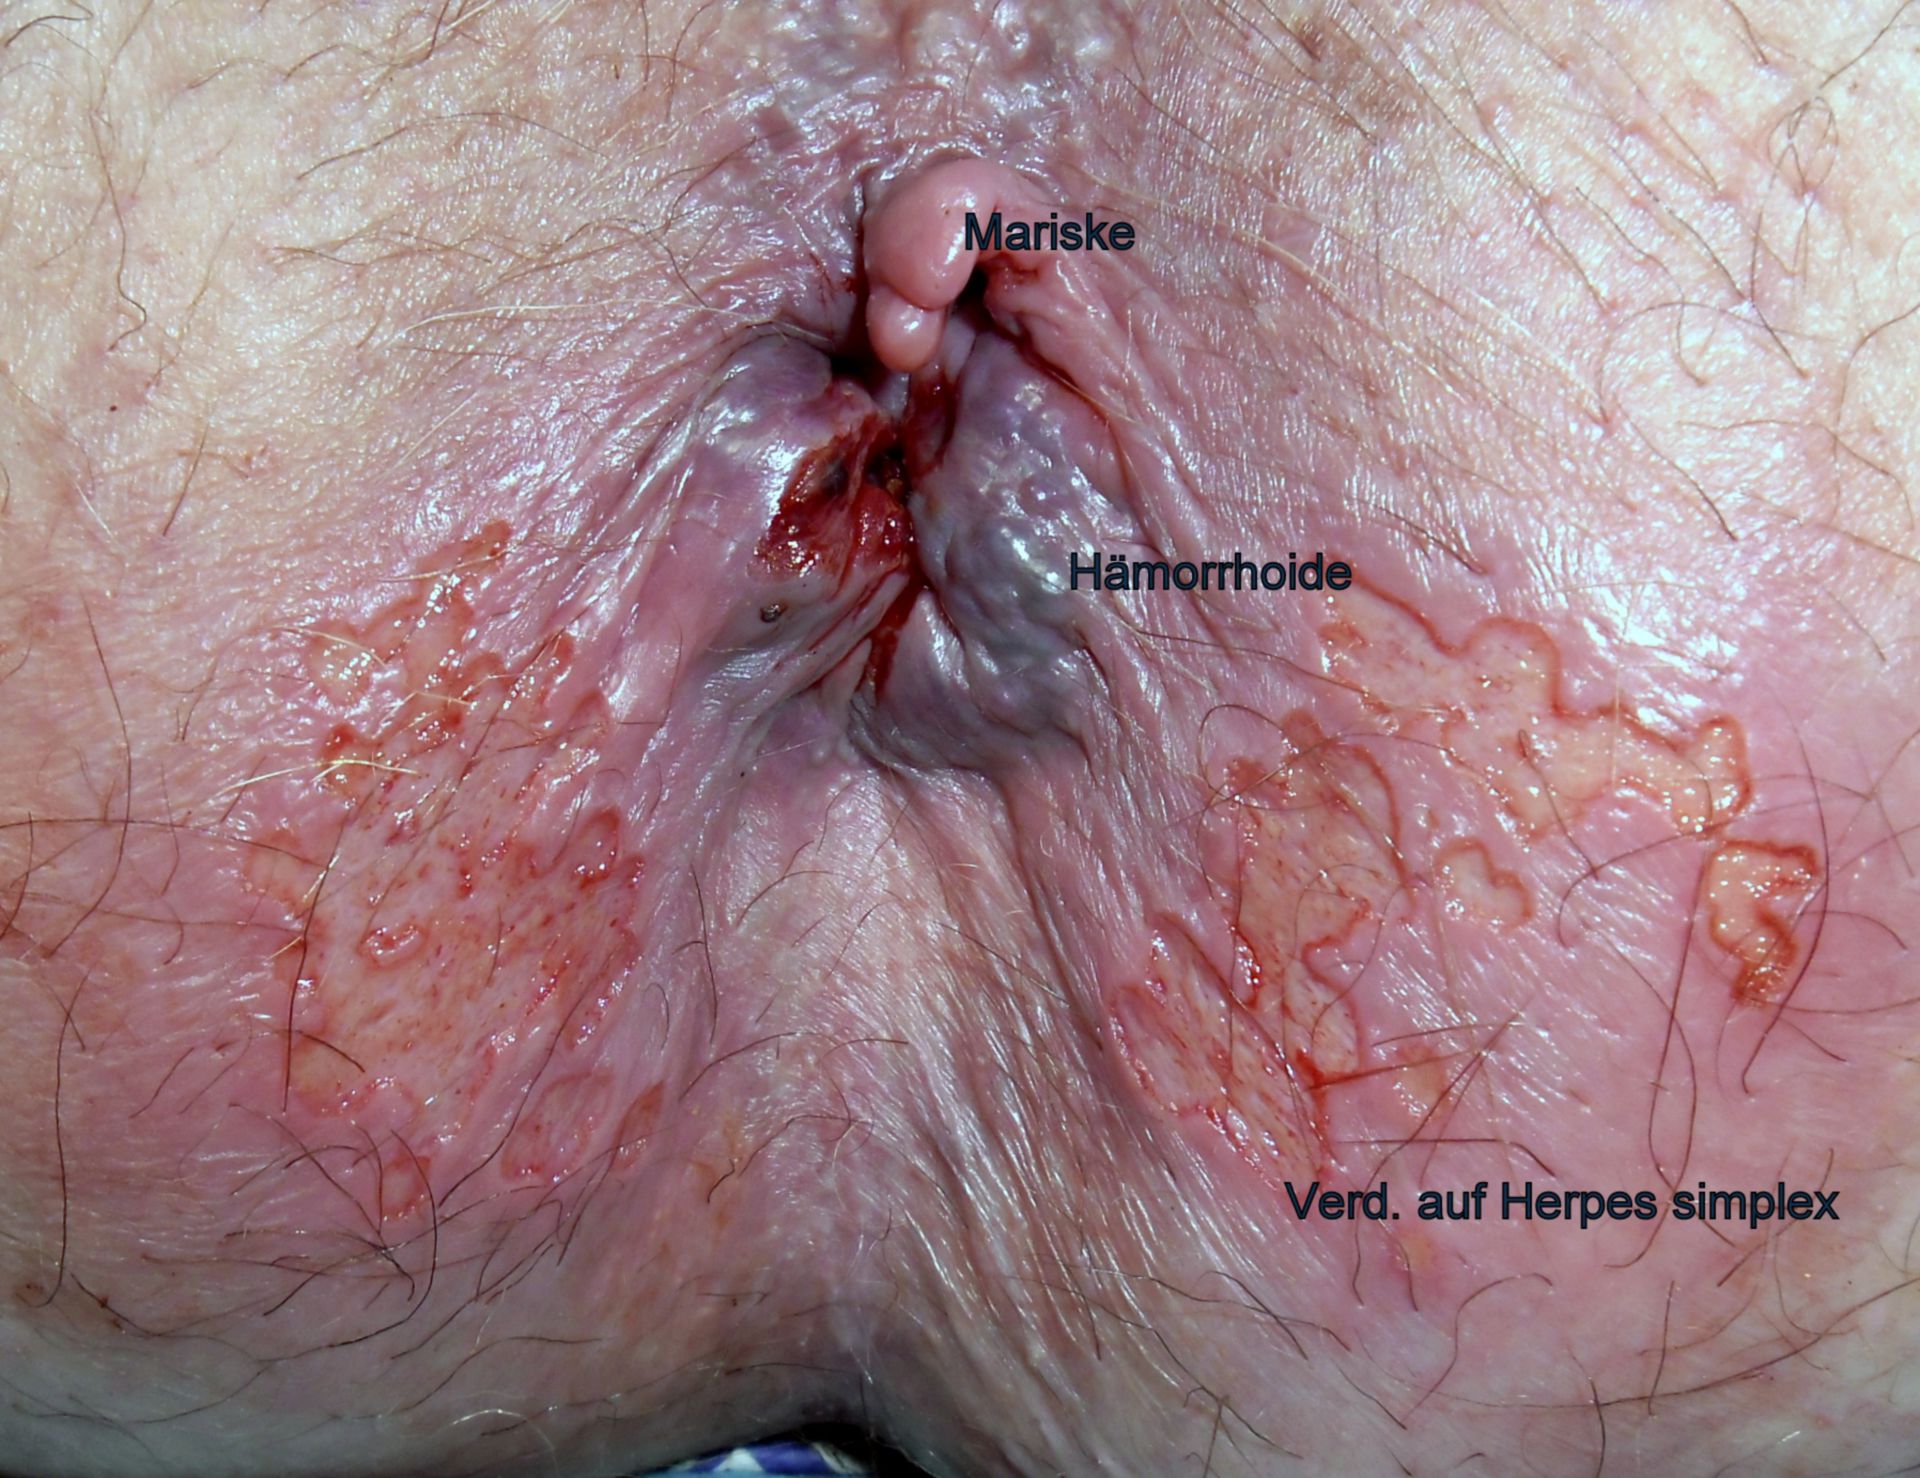 Perianal Herpes simplex